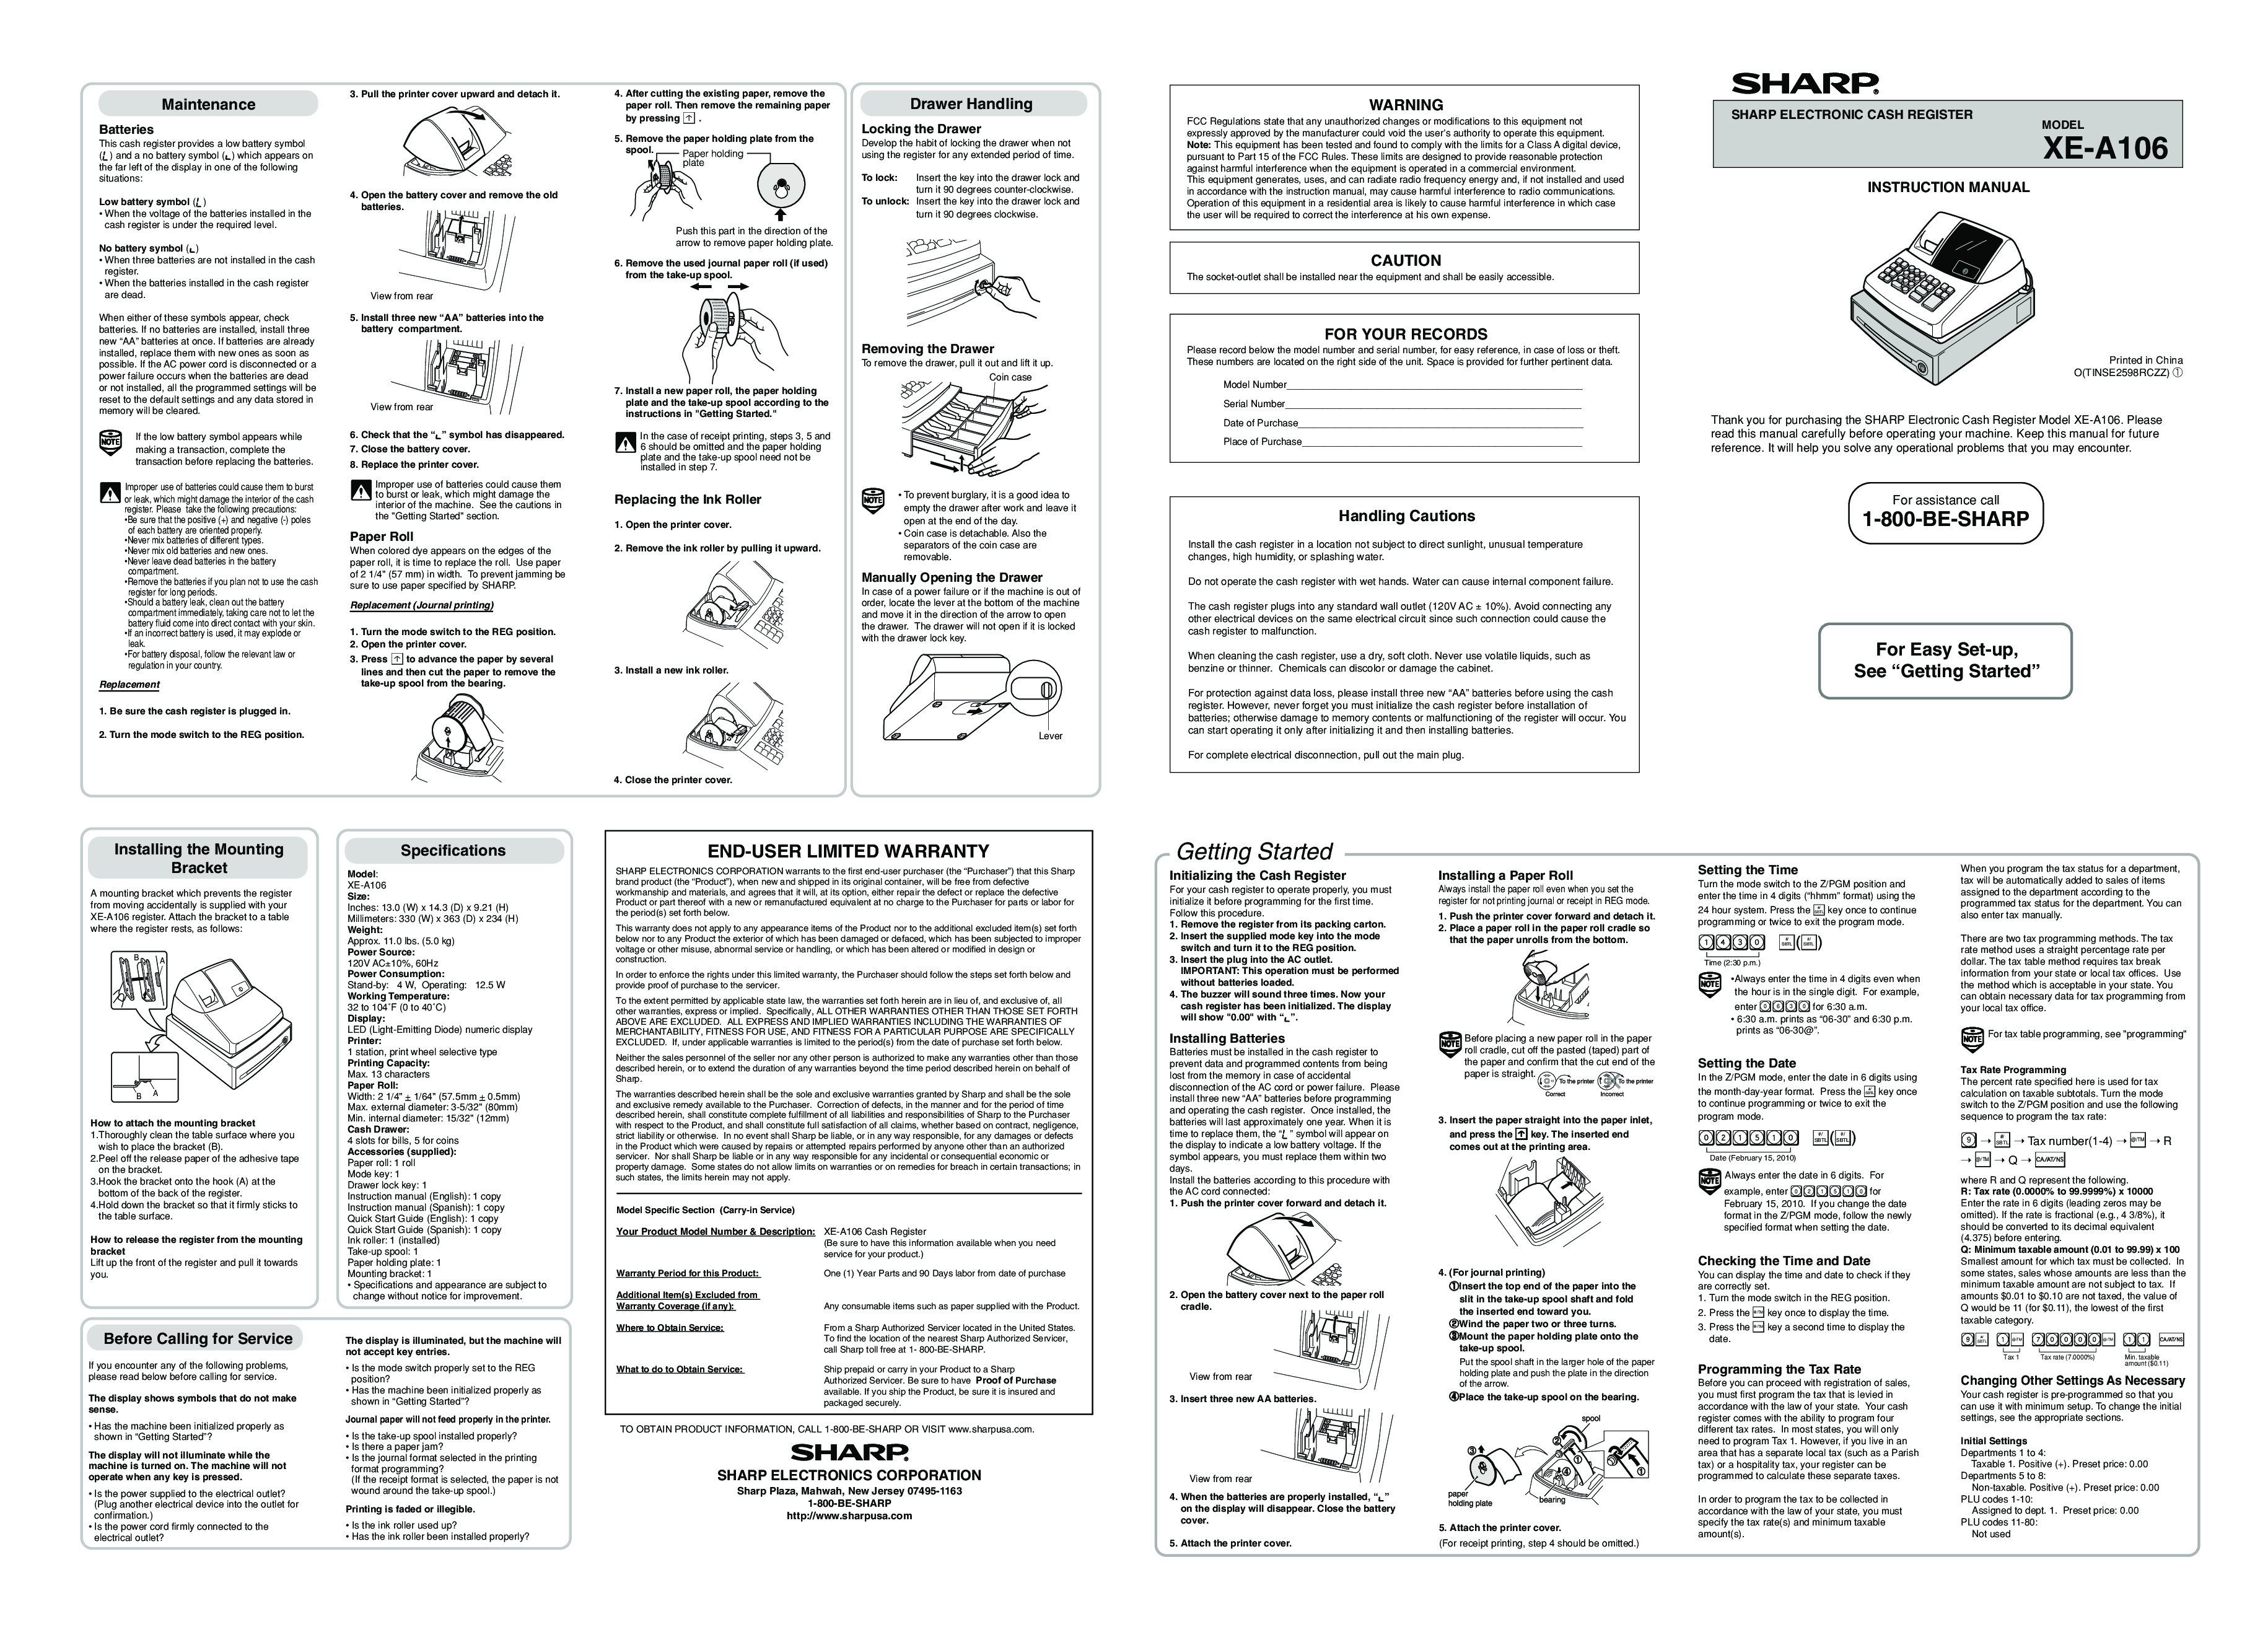 Sharp XE-A106 User Manual